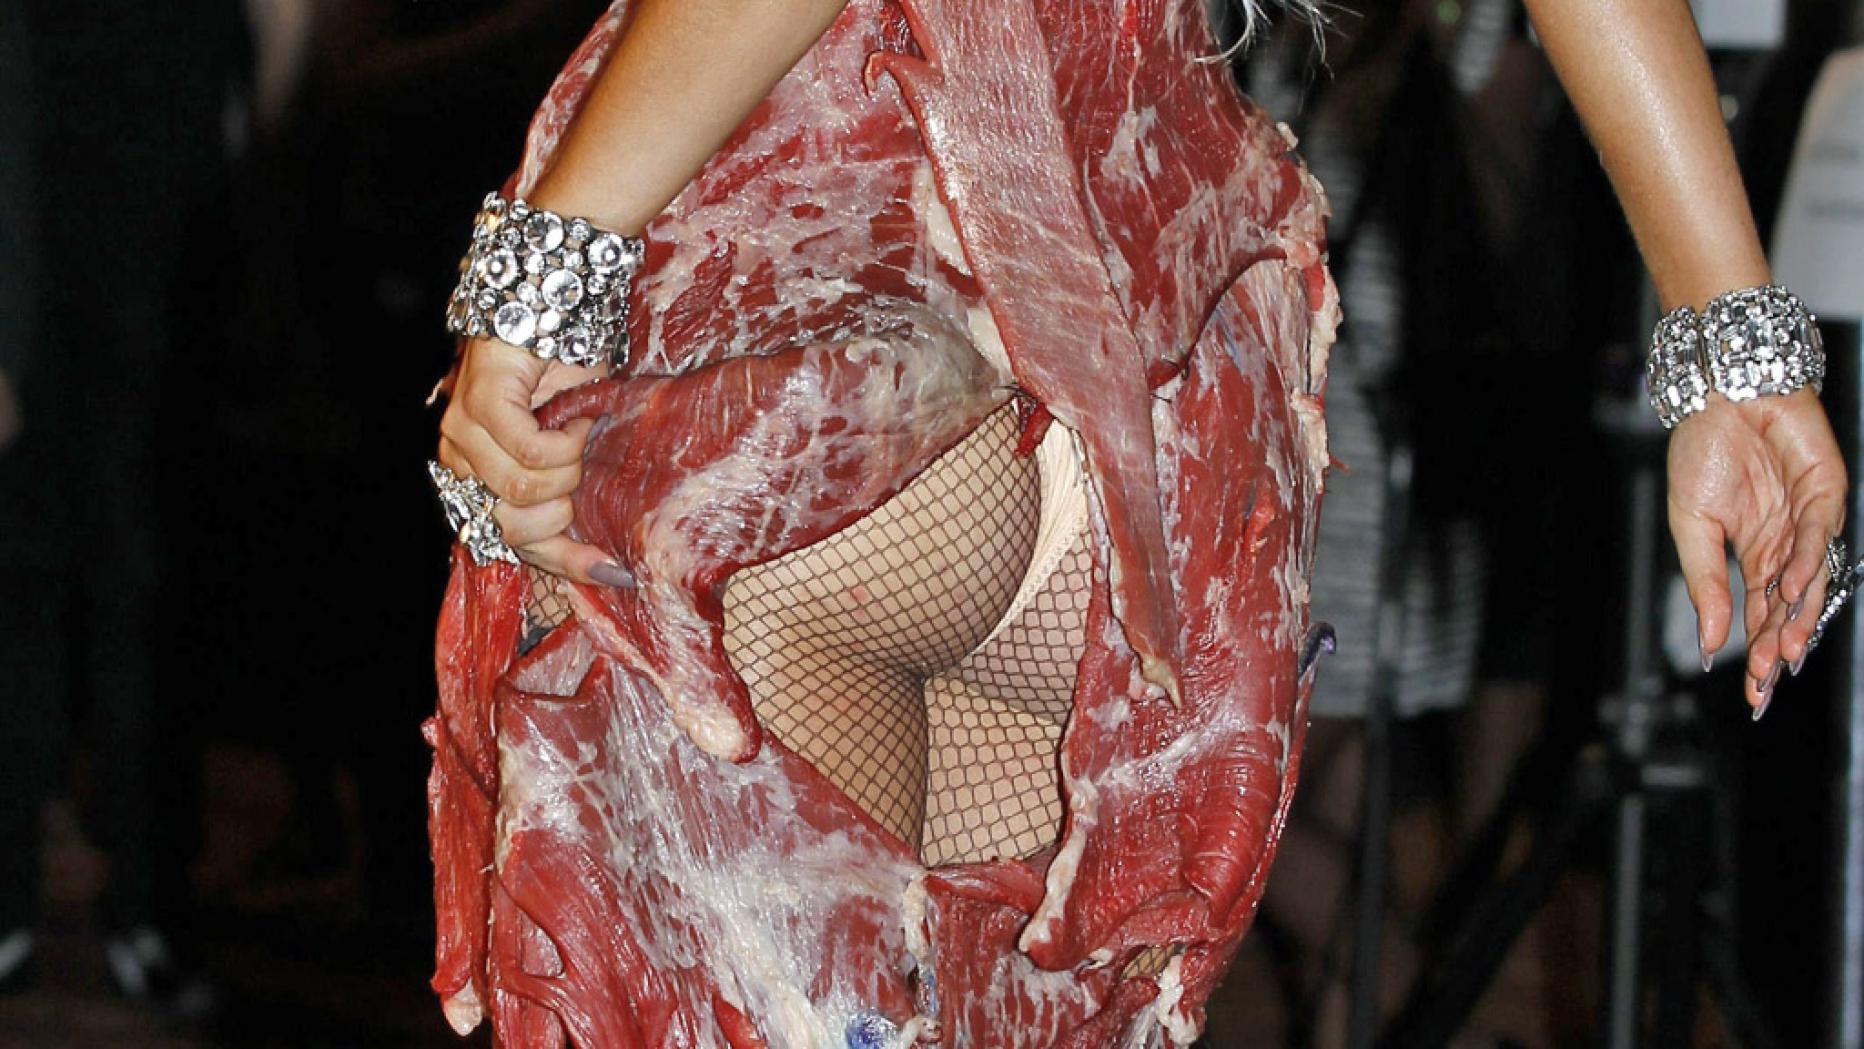 Платье из мяса у леди гаги